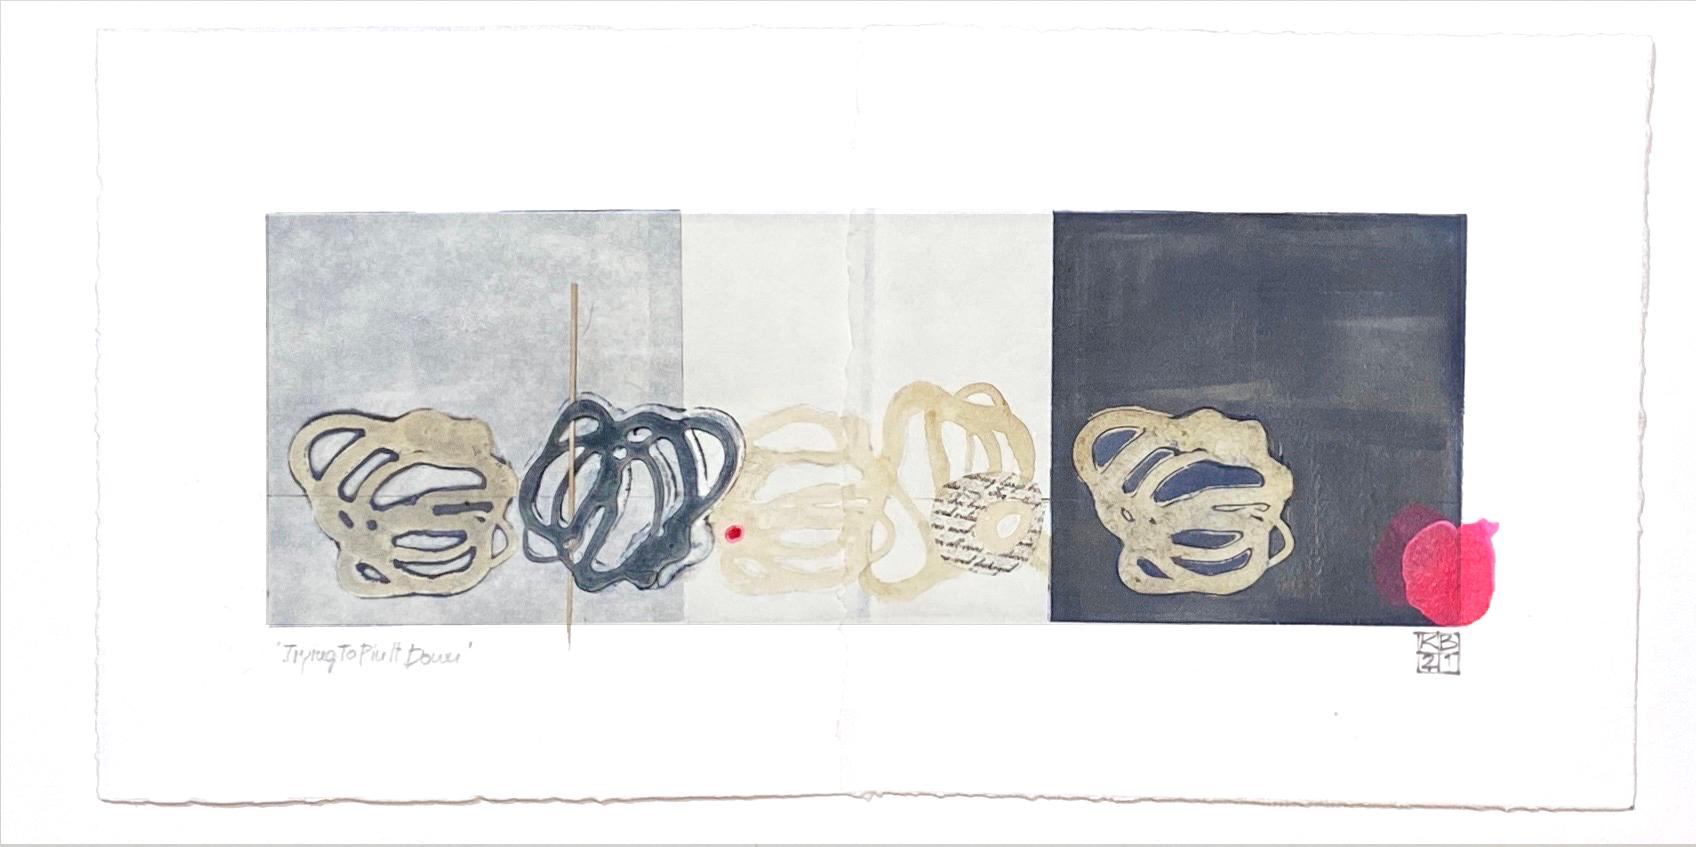 Karin Bruckner Abstract Print - TryingToPinItDown, mixed media monoprint on paper, earth tones and neutrals